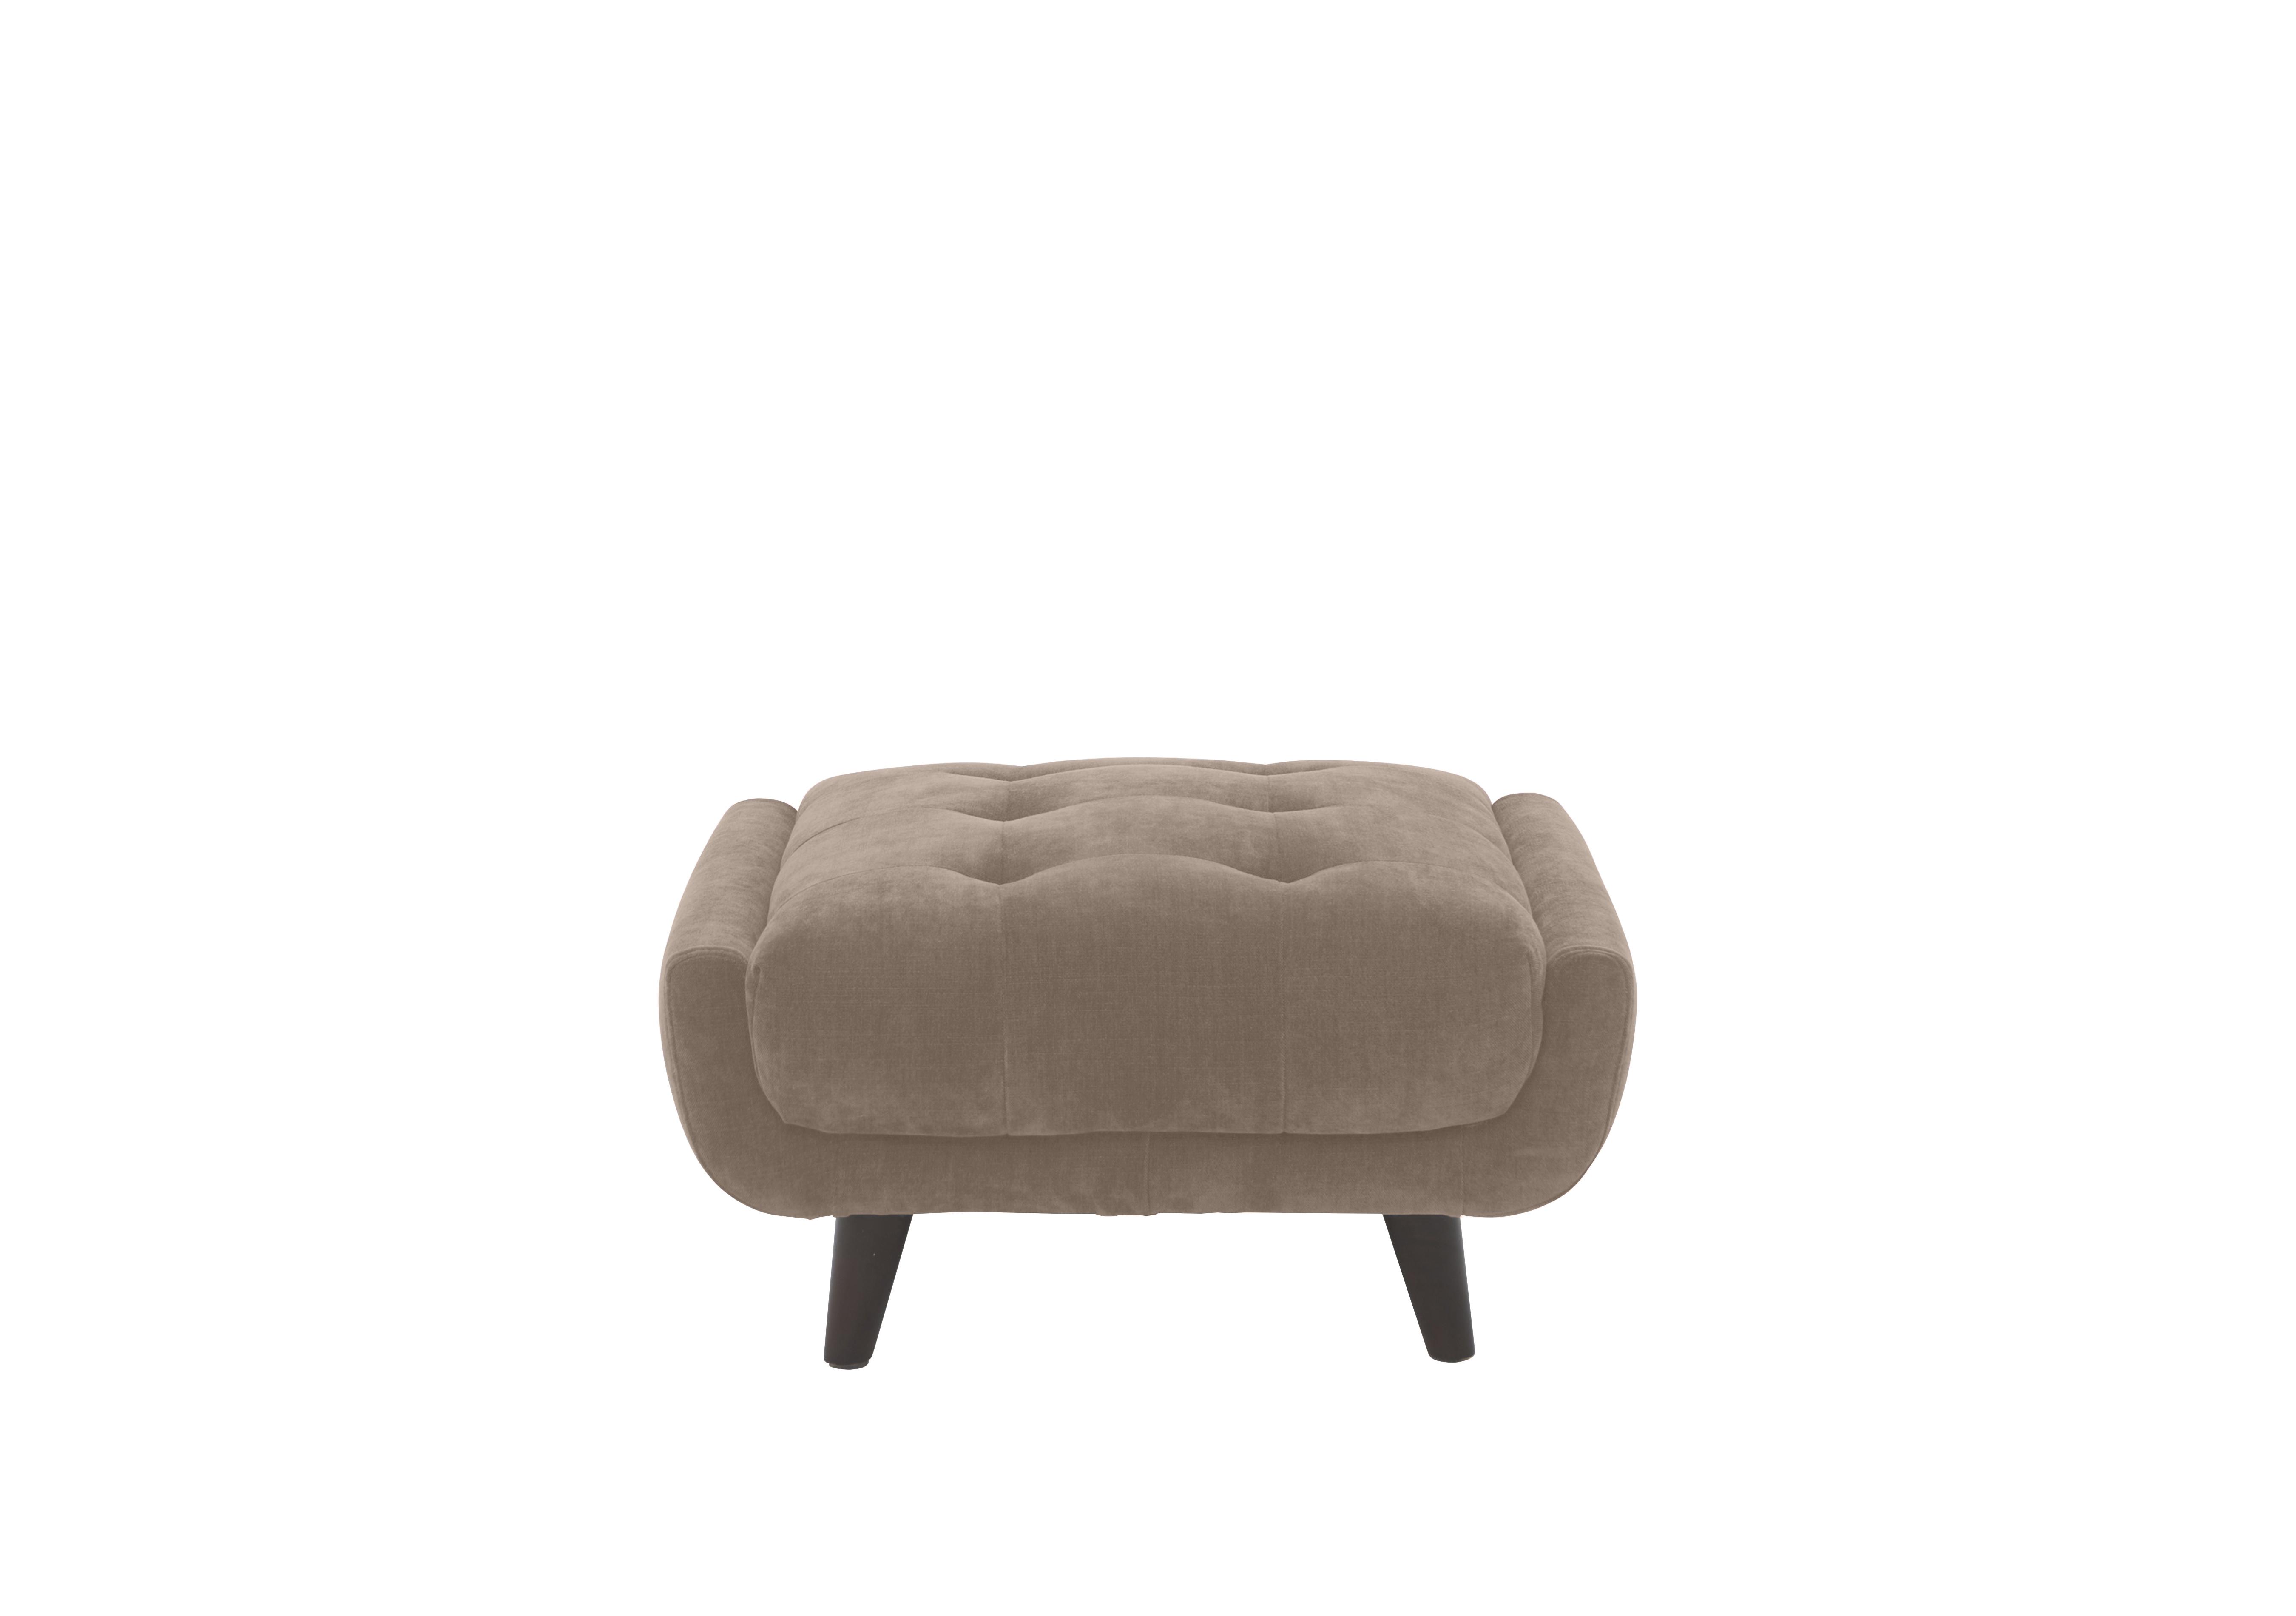 Rene Small Fabric Footstool in Manhattan 58005 Nutmeg Es Ft on Furniture Village